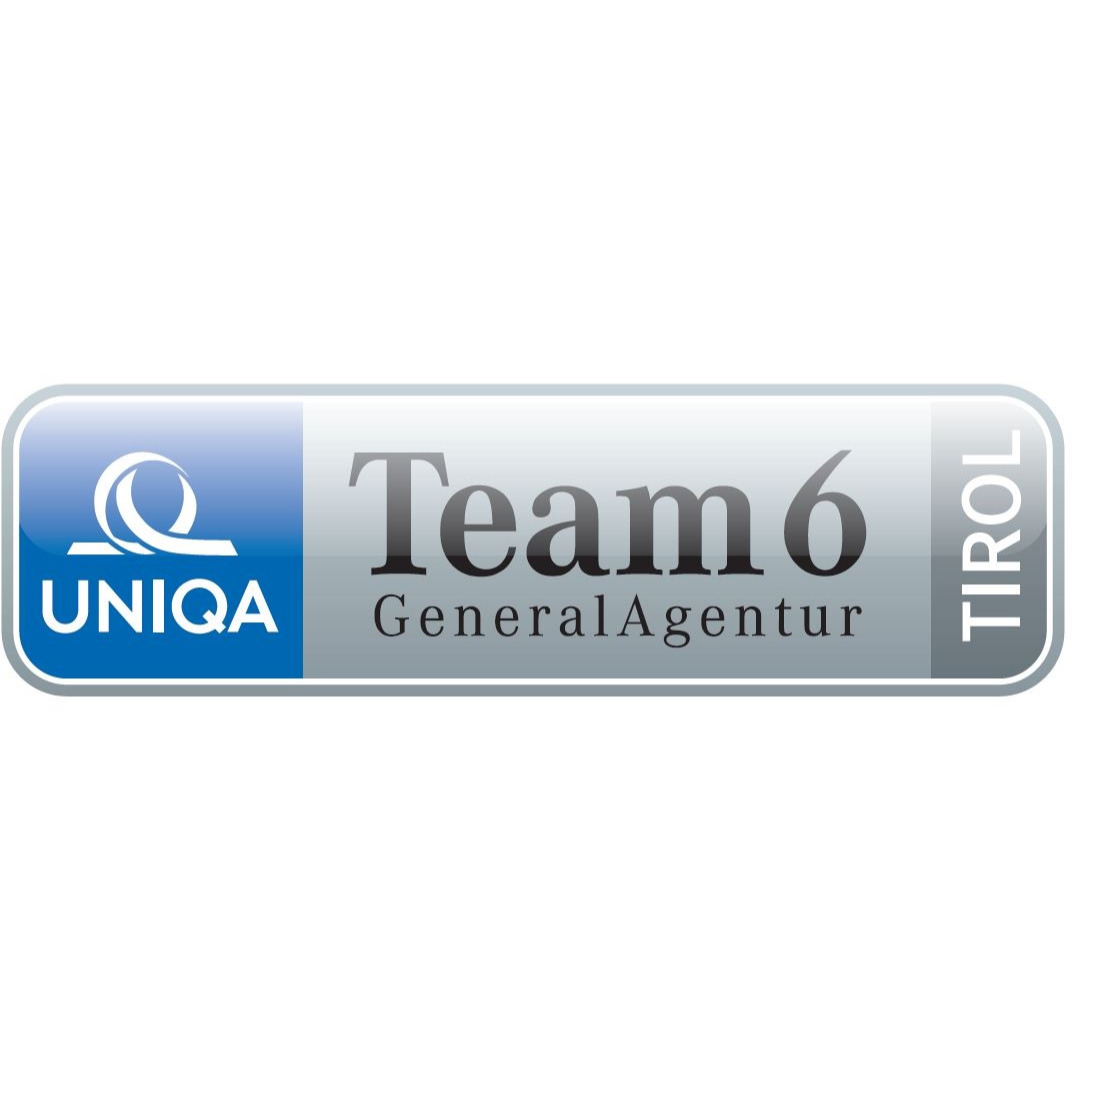 Uniqa GeneralAgentur Team 6 - Fagschlunger Spielmann Engl OG Zulassungsstelle Logo